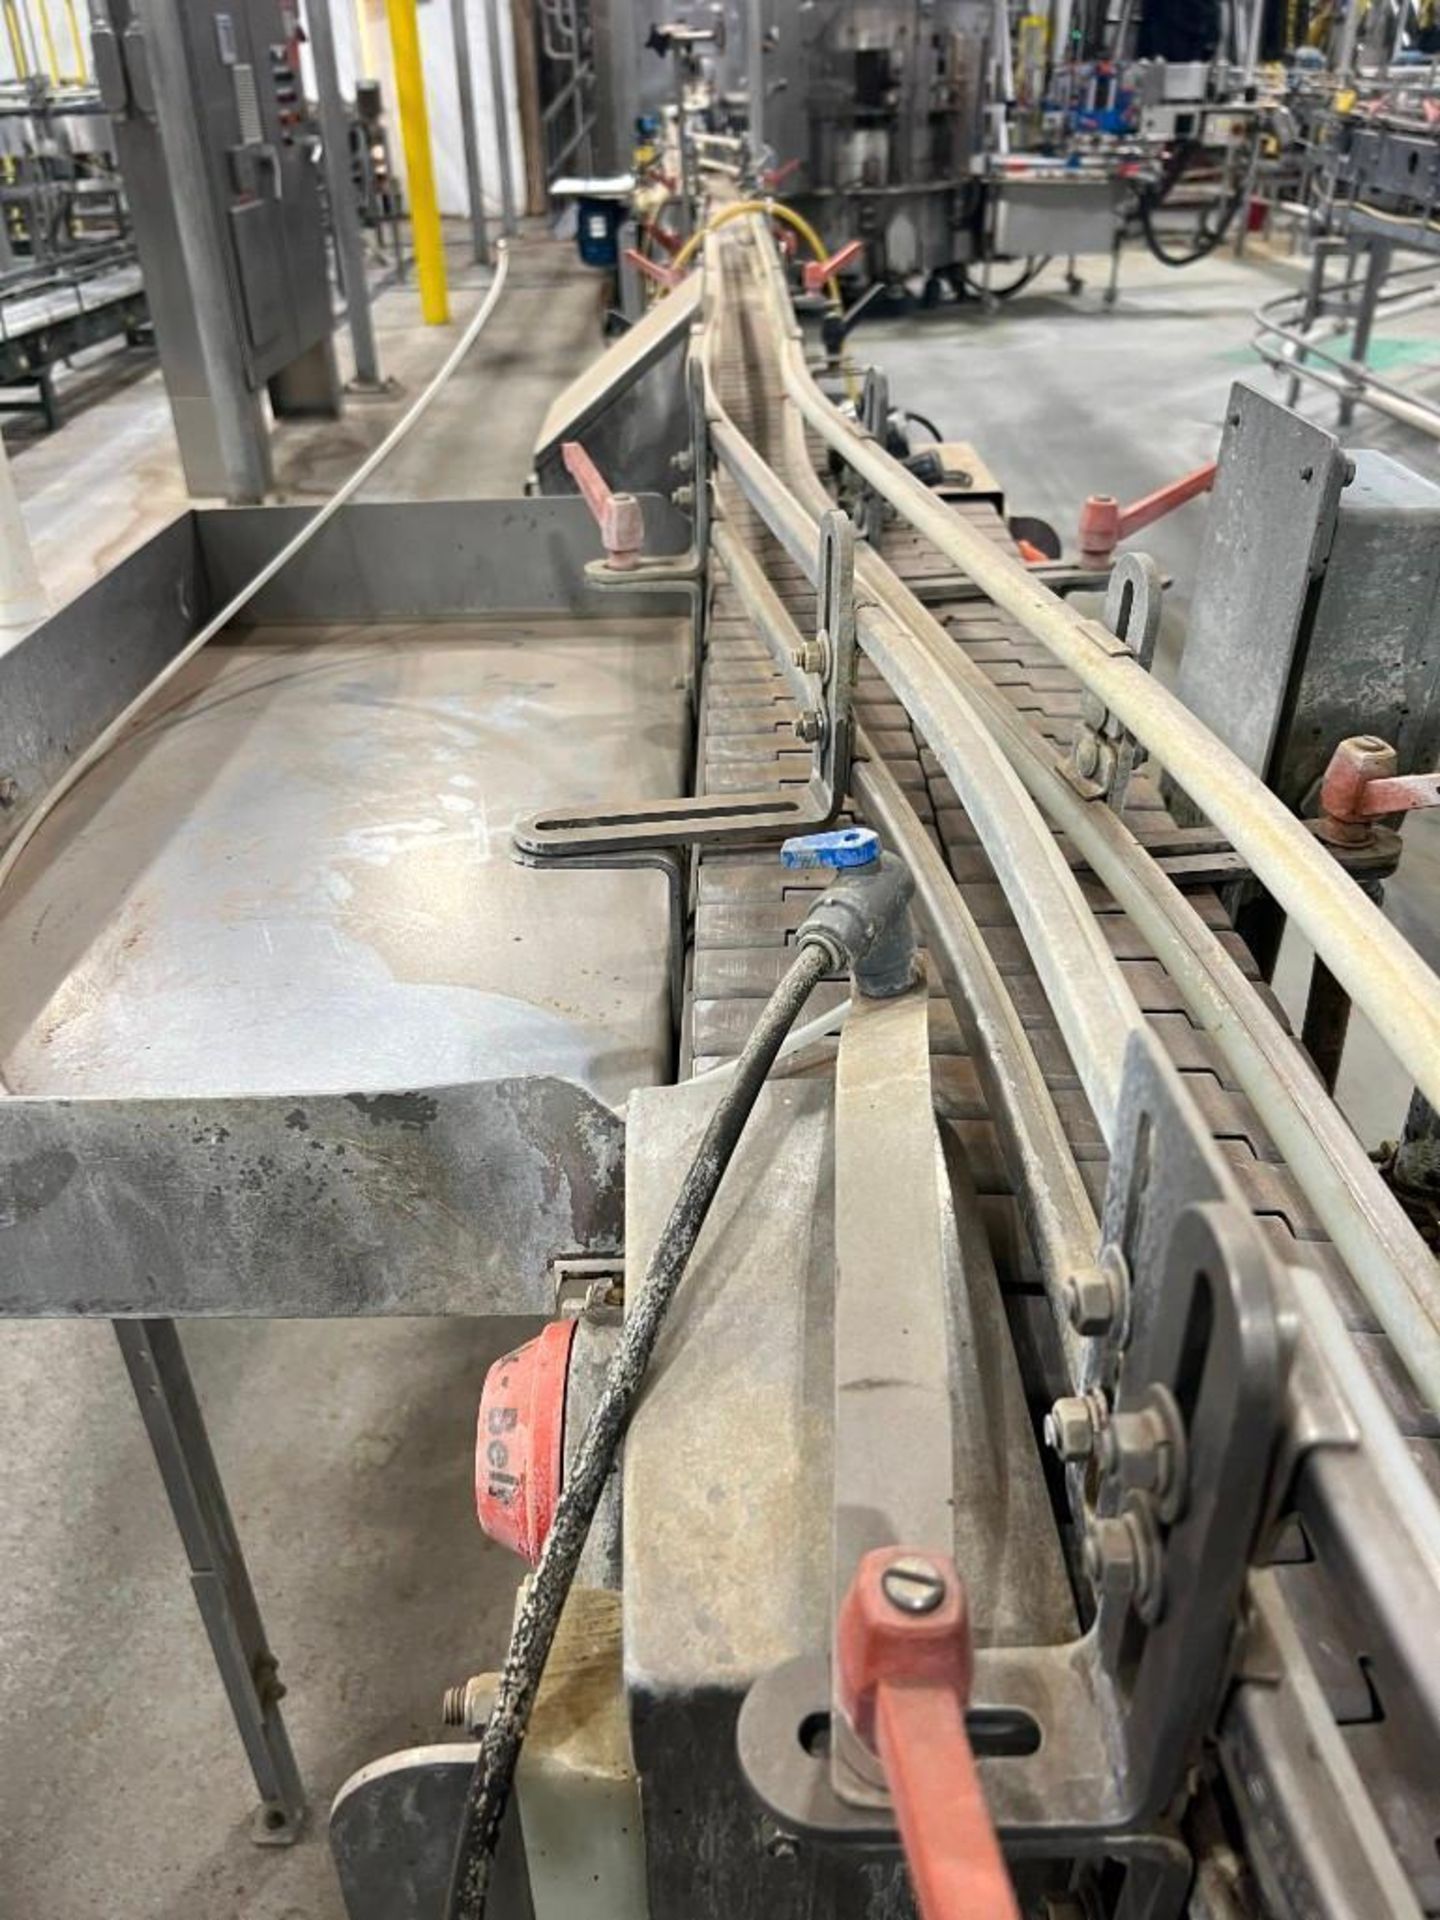 Alliance Industrial Washdown Stainless Steel Powered Conveyor